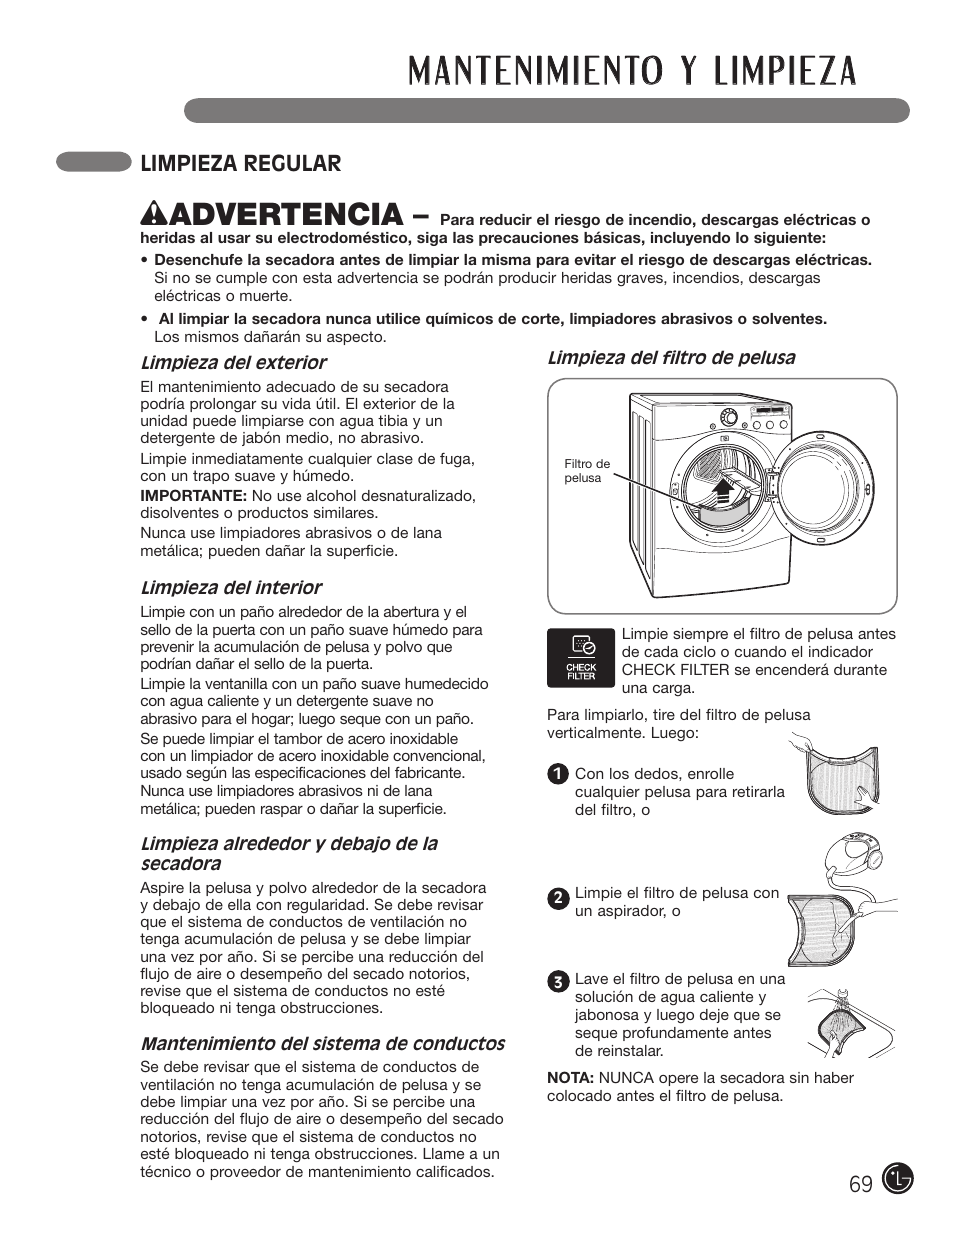 W advertencia | LG D5966W User Manual | Page 69 / 80